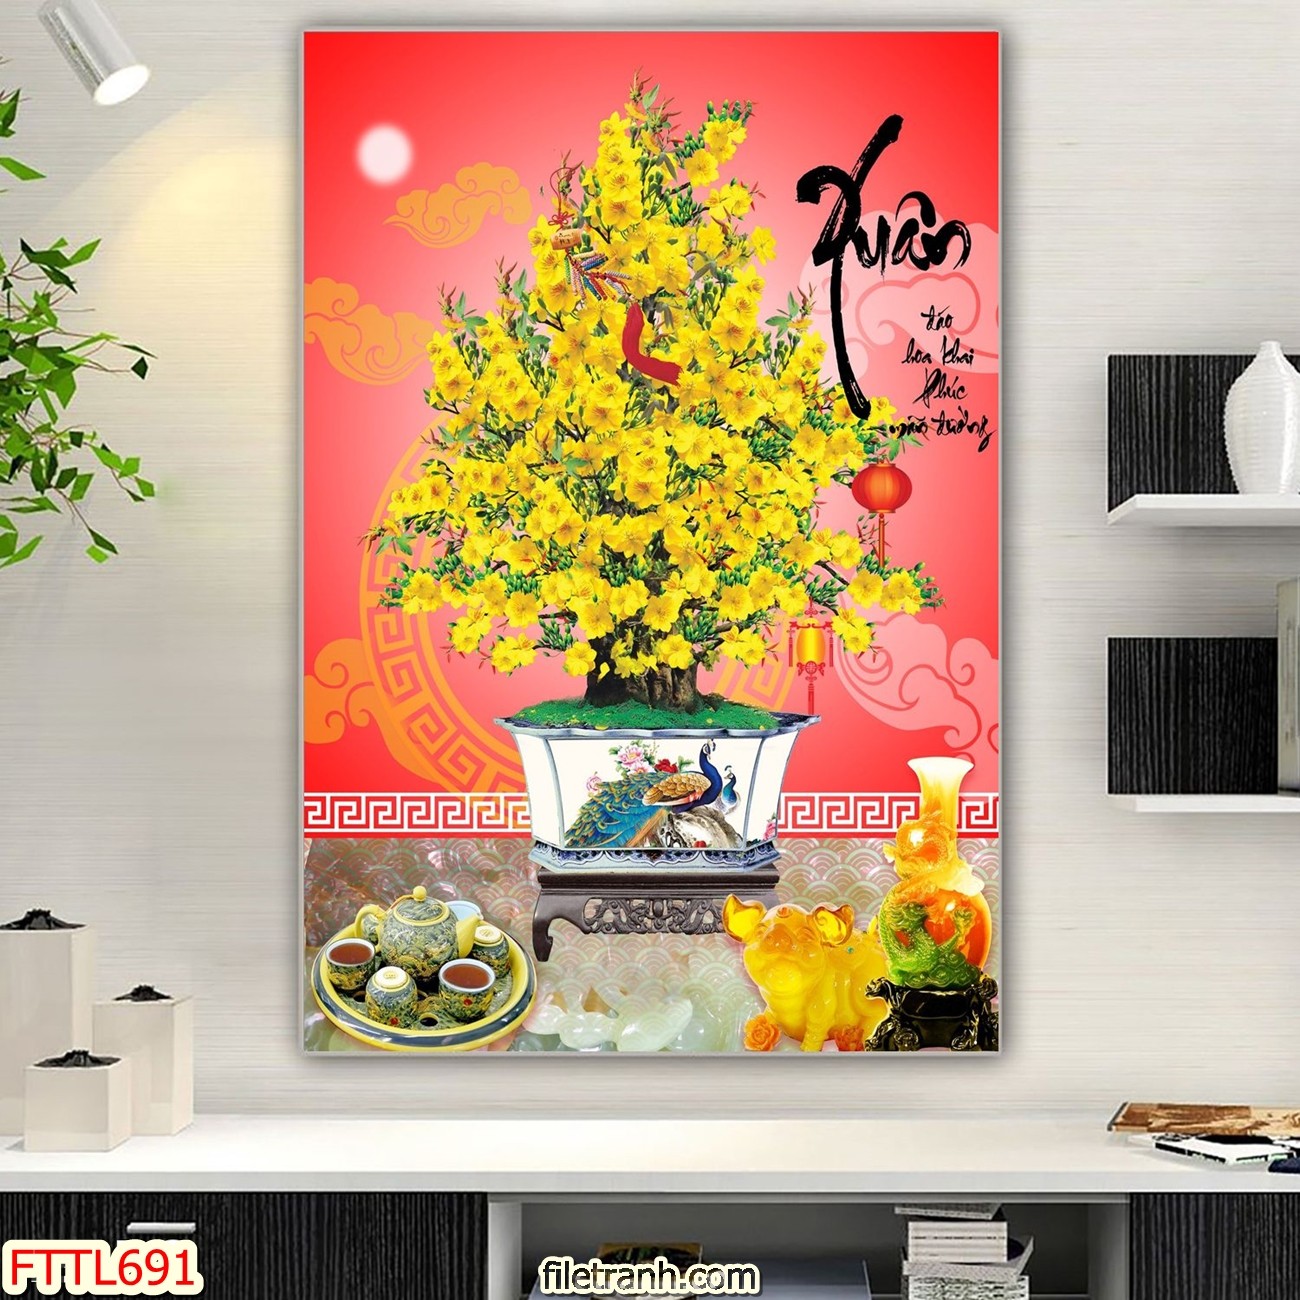 https://filetranh.com/file-tranh-chau-mai-bonsai/file-tranh-chau-mai-bonsai-fttl691.html